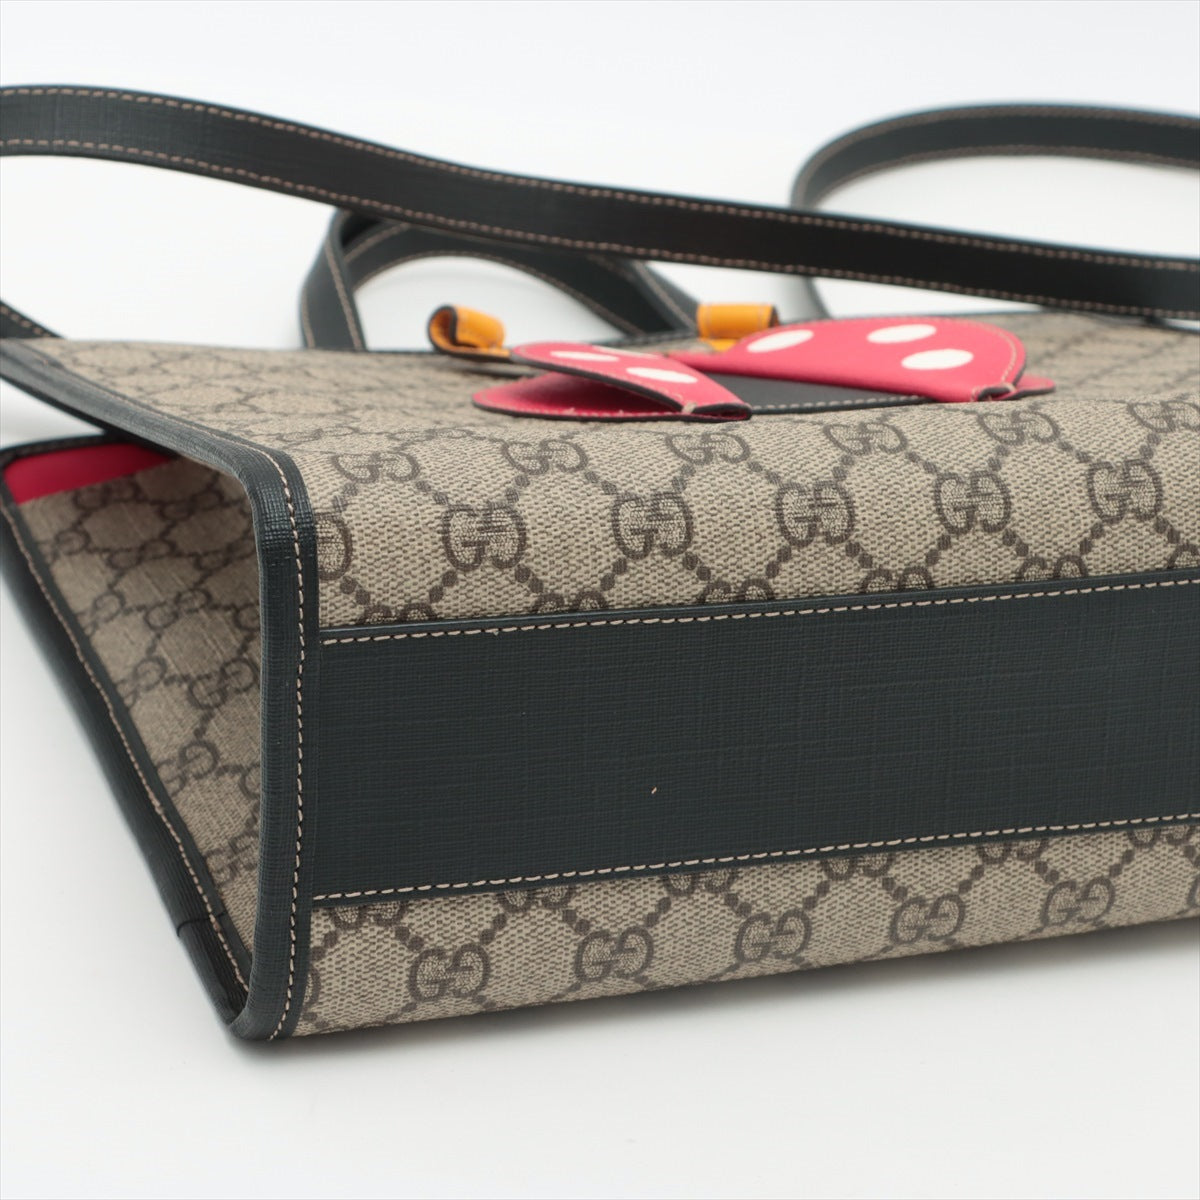 Gucci GG Supreme Children's PVC & leather 2 Way Handbag Black x Beige 667965